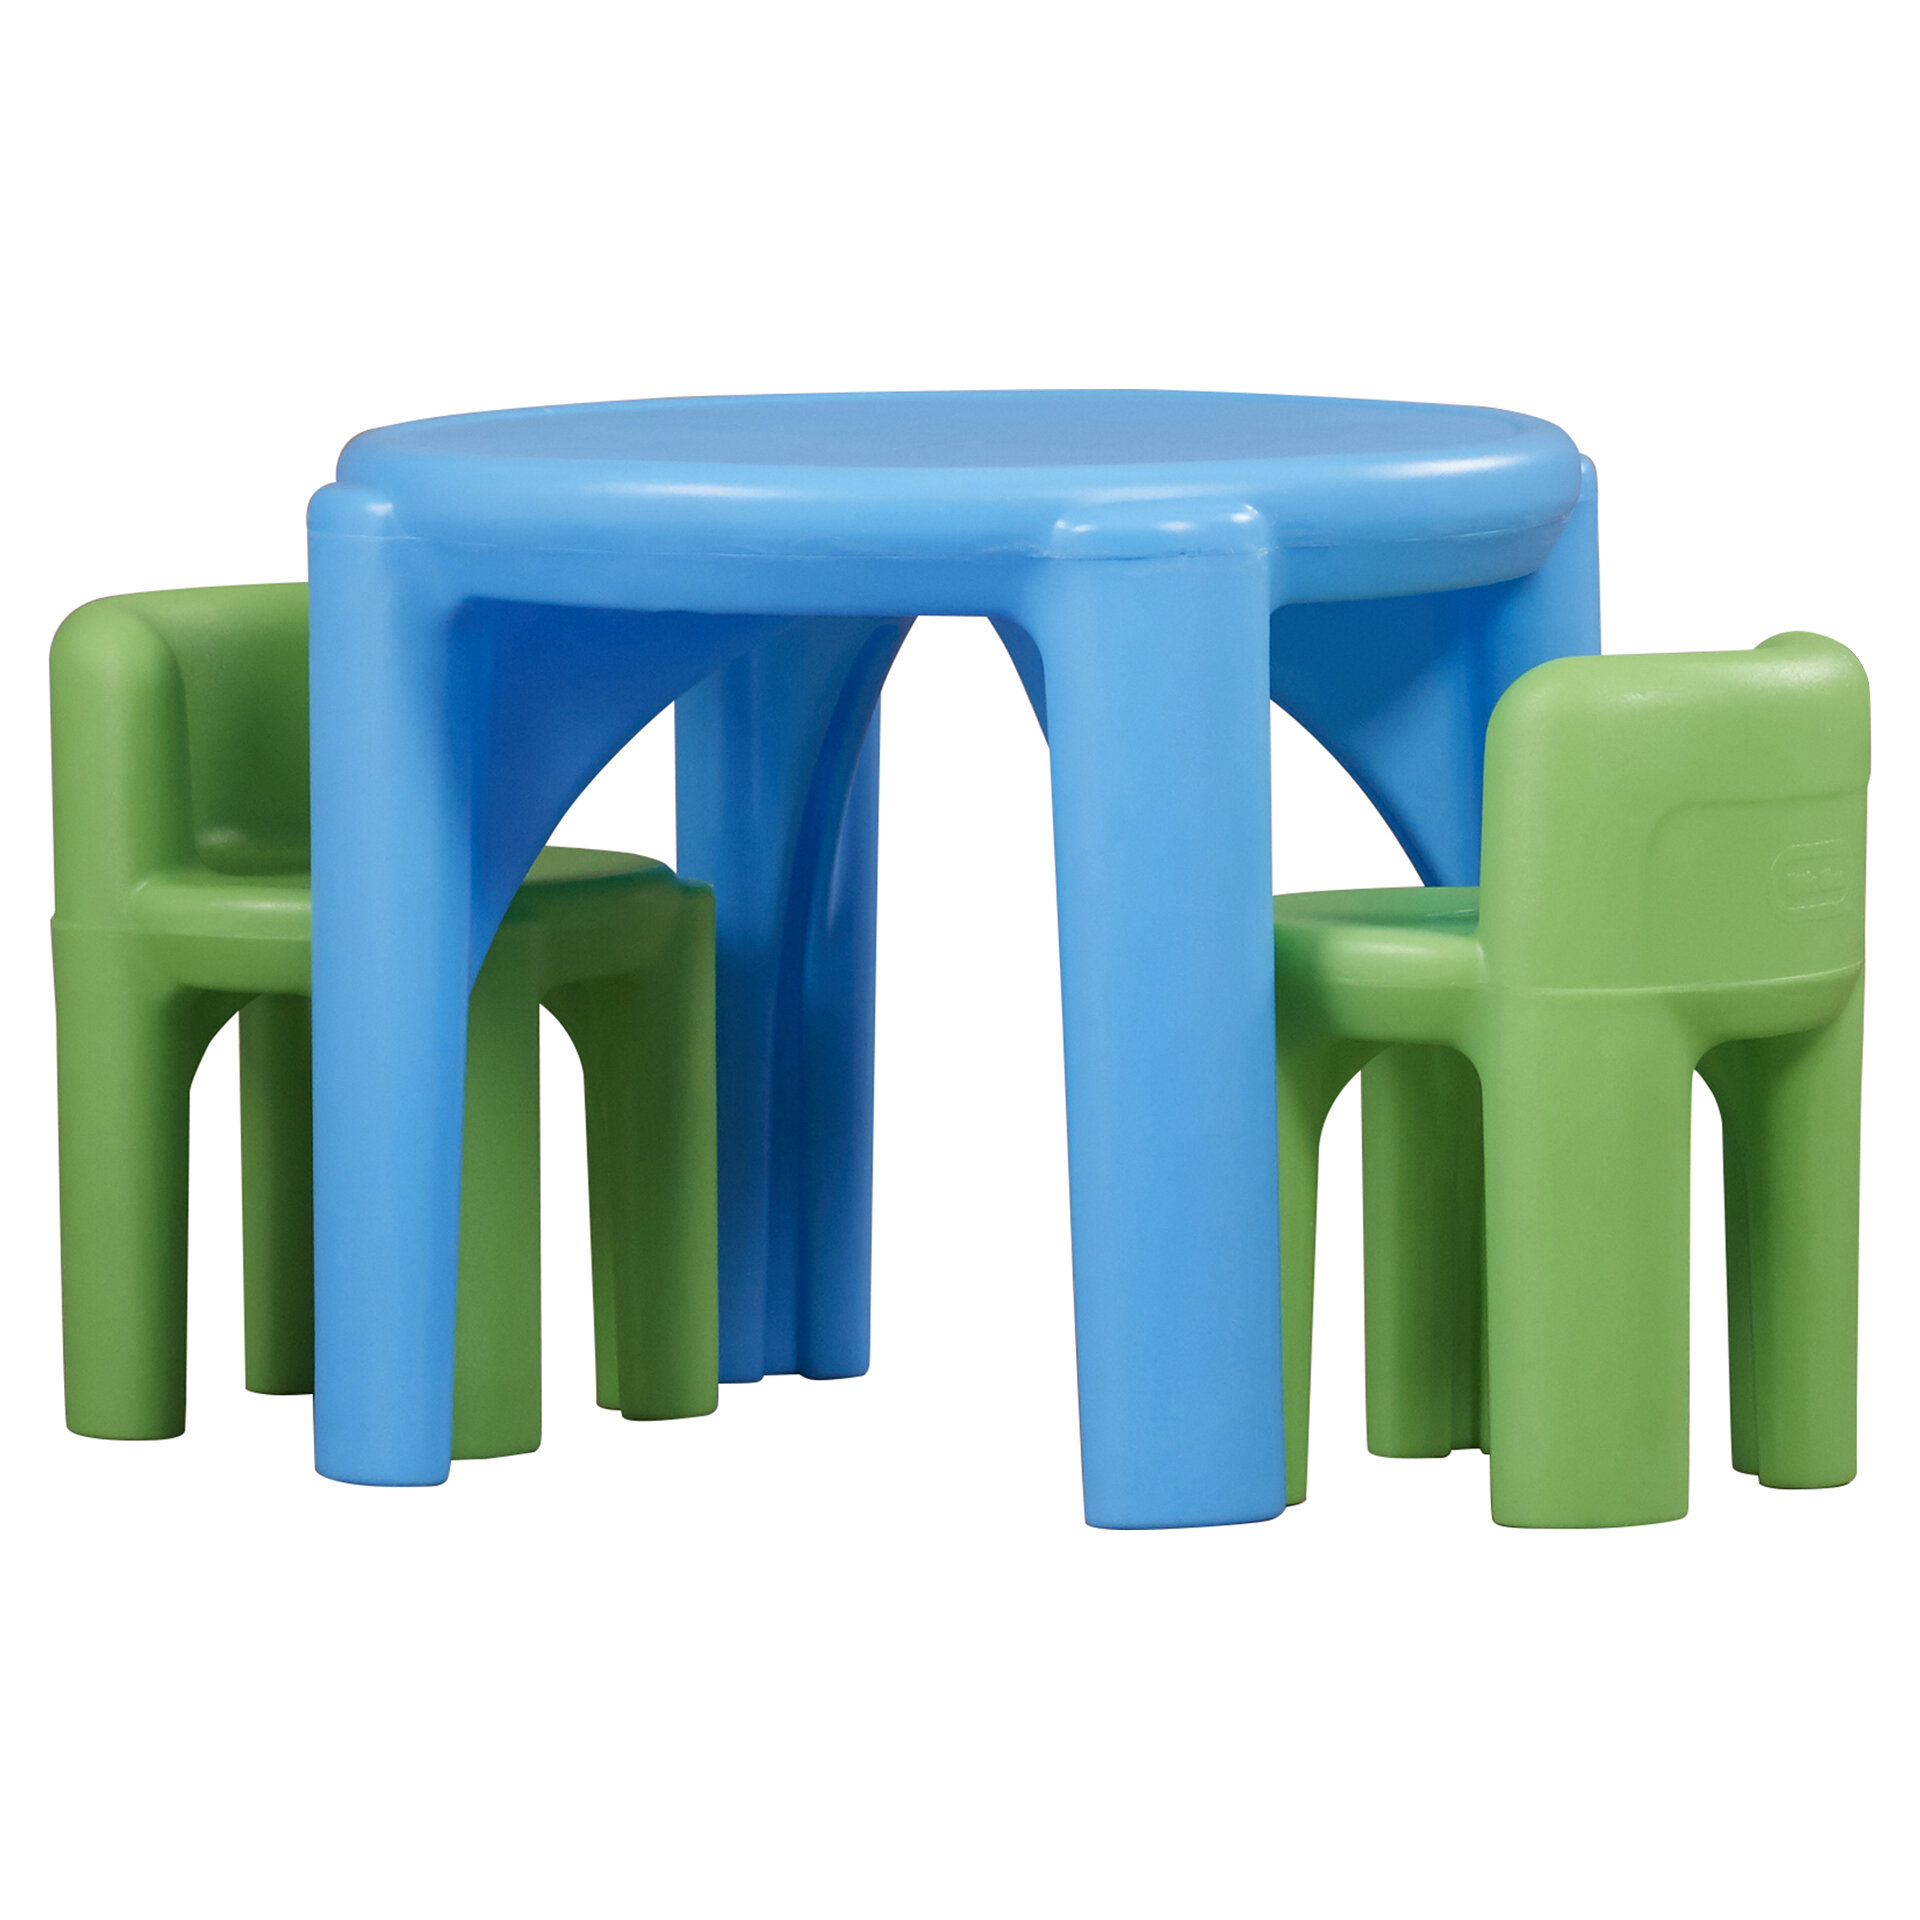 little table for kids